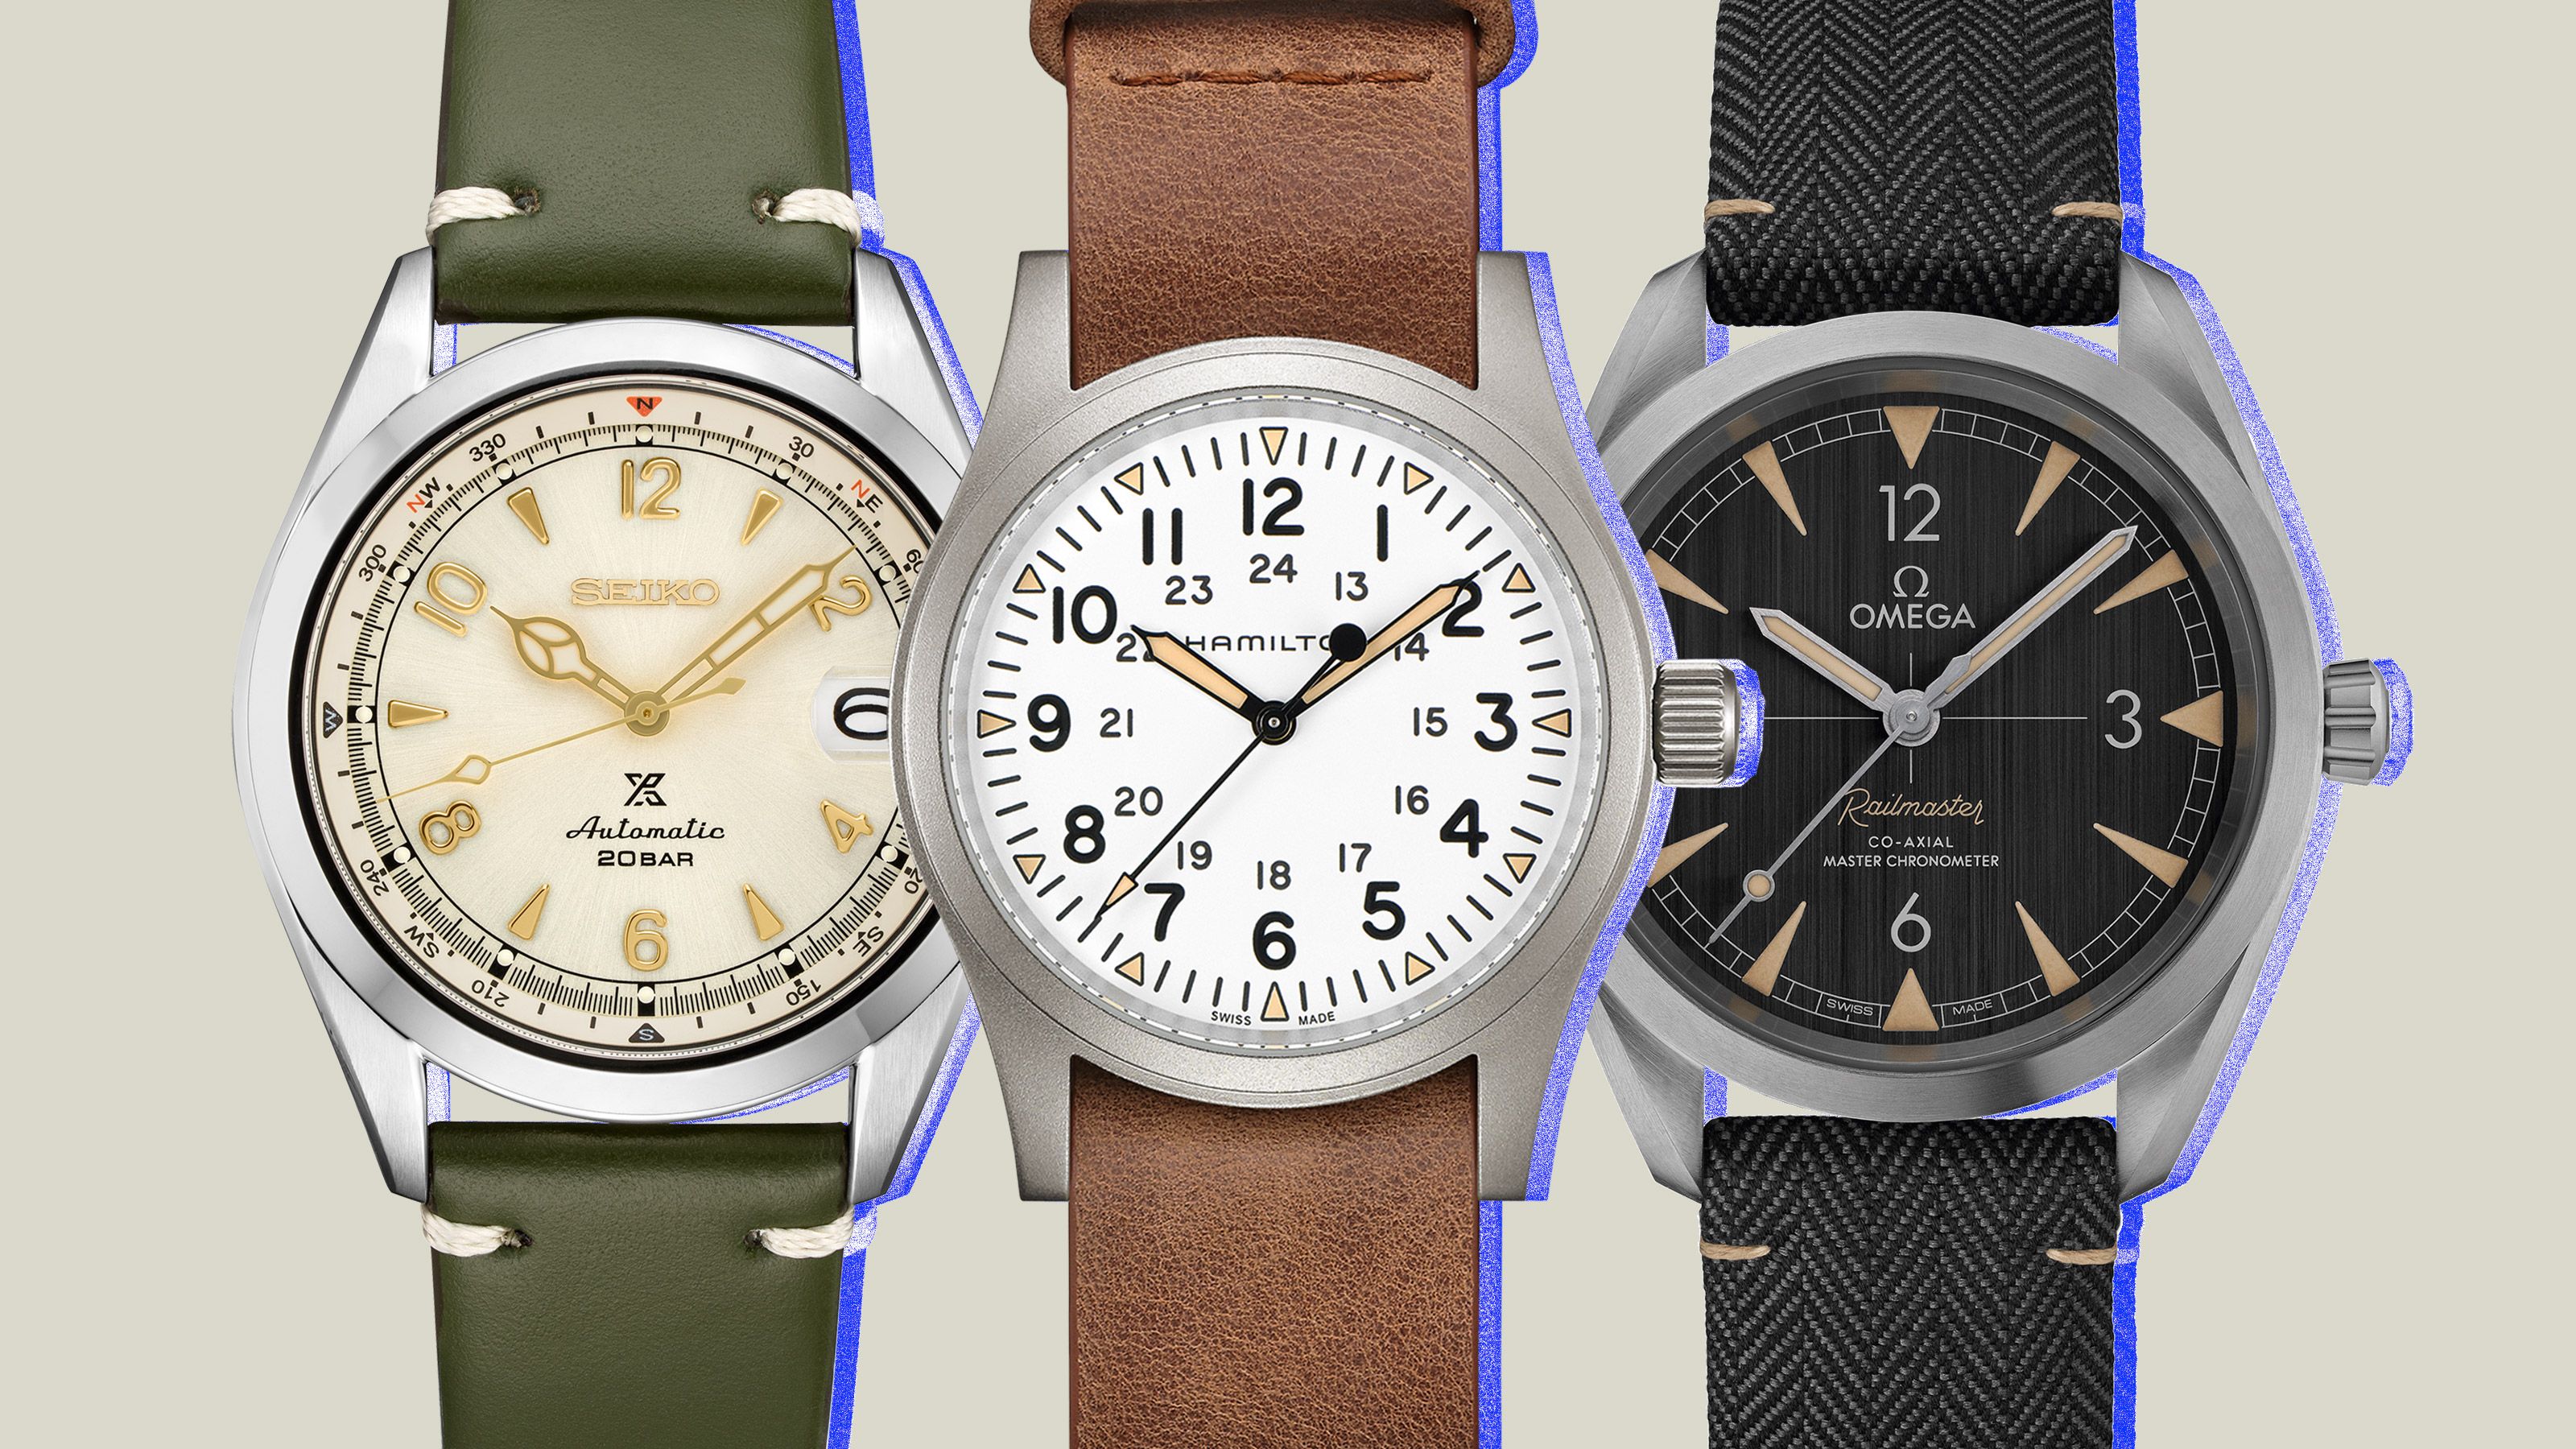 Luxury Men Fashion Casual Gift Watches Men's Quartz Clock Man Leather Strap  Army Military Sports Wrist Watch